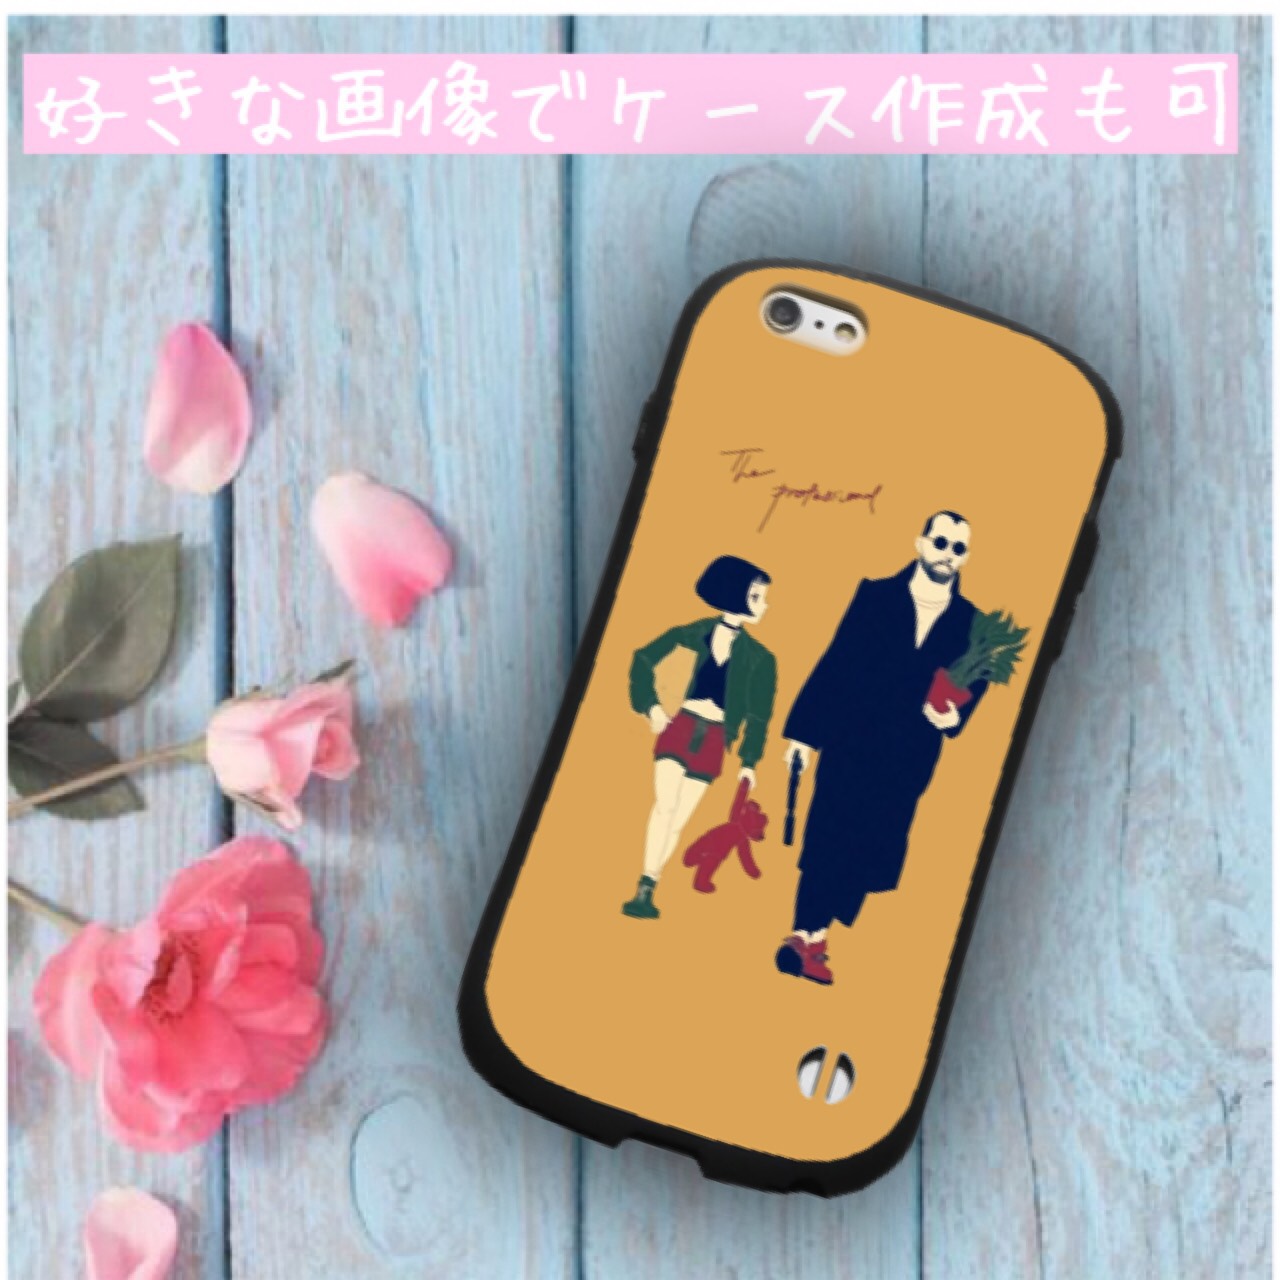 iPhone 6/6s/7/8 スマホケース カバー 手帳 本革 ピンク 新品